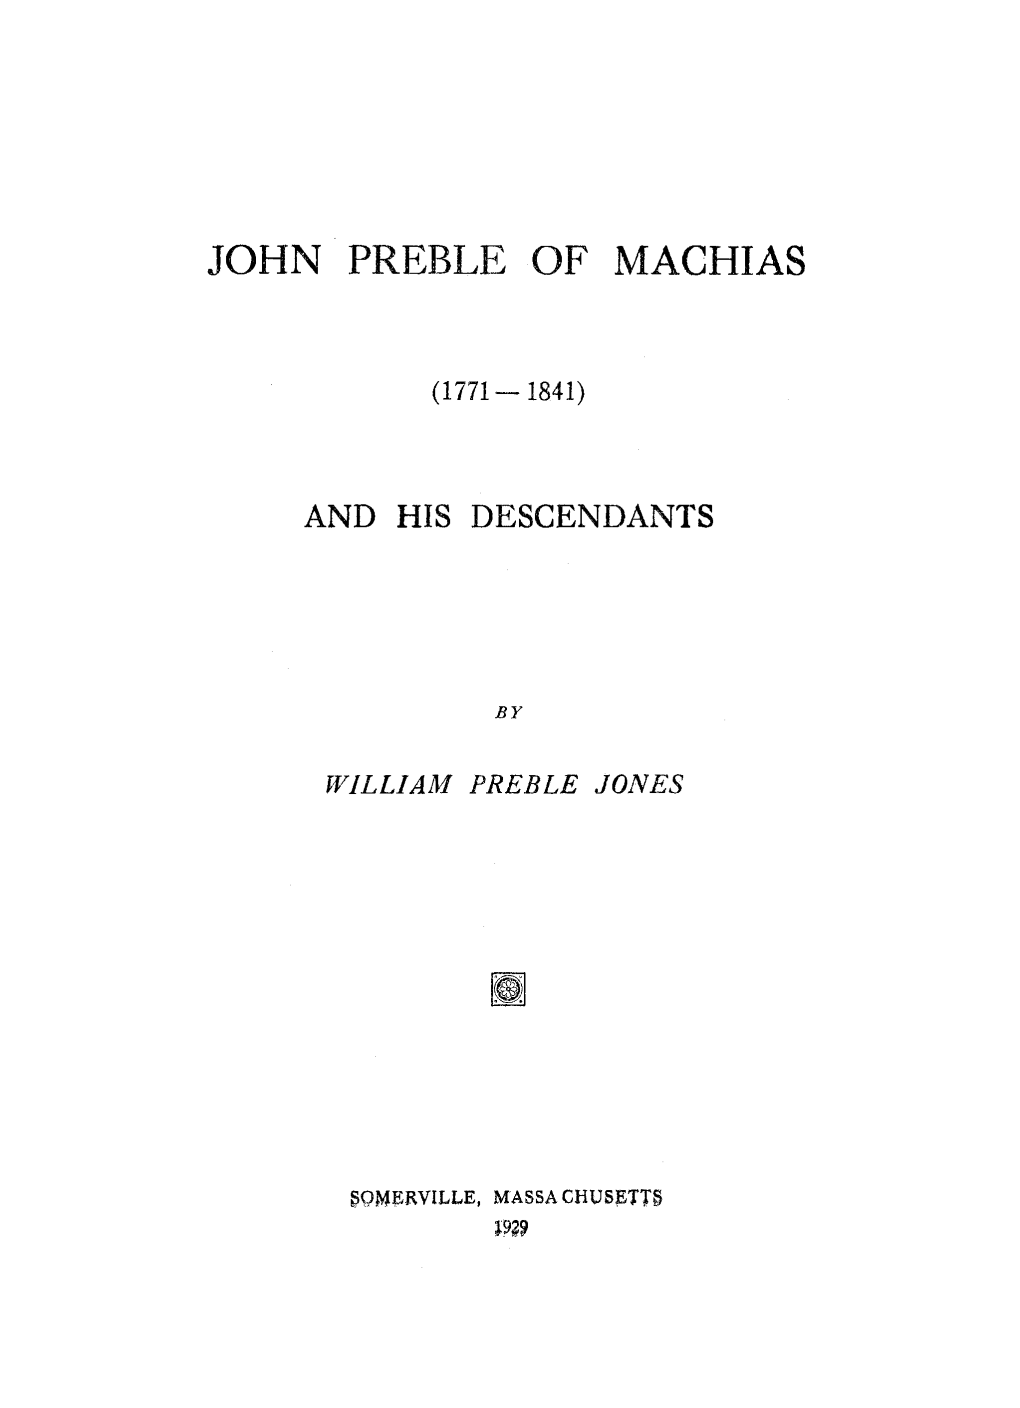 John Preble of Machias